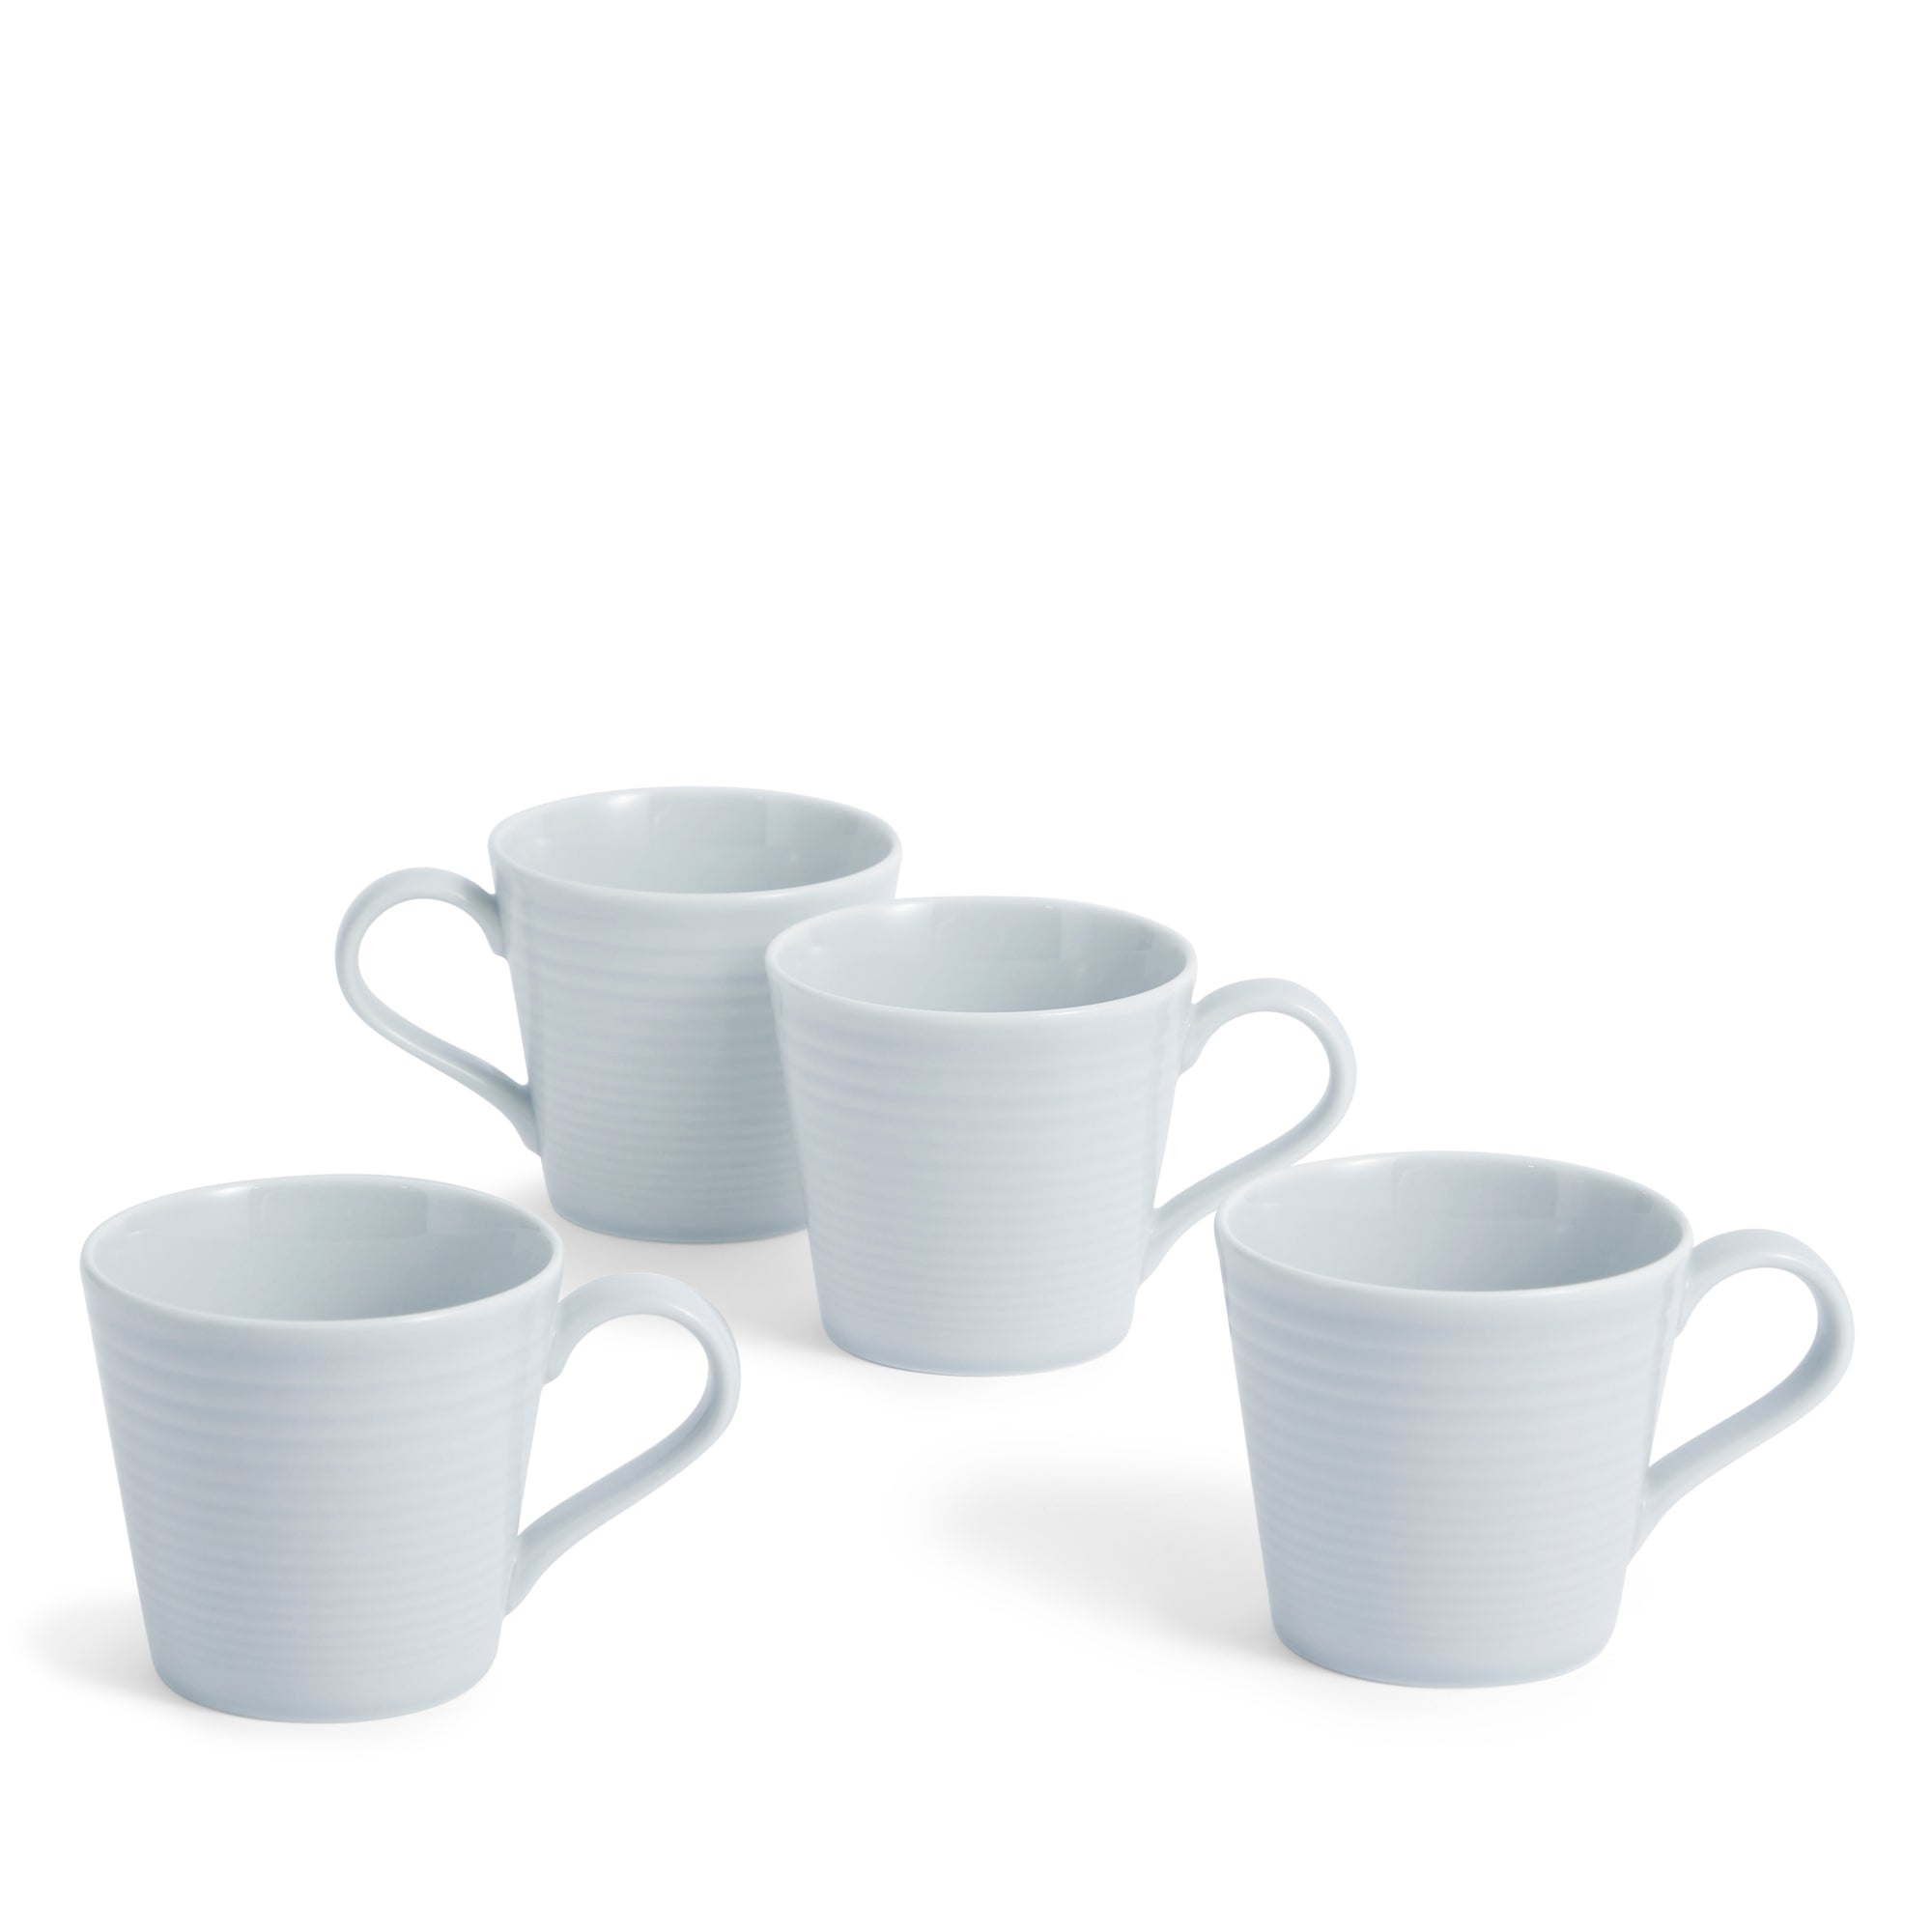 Royal Doulton Gordon Ramsay Maze Light Grey Mug - Set of 4